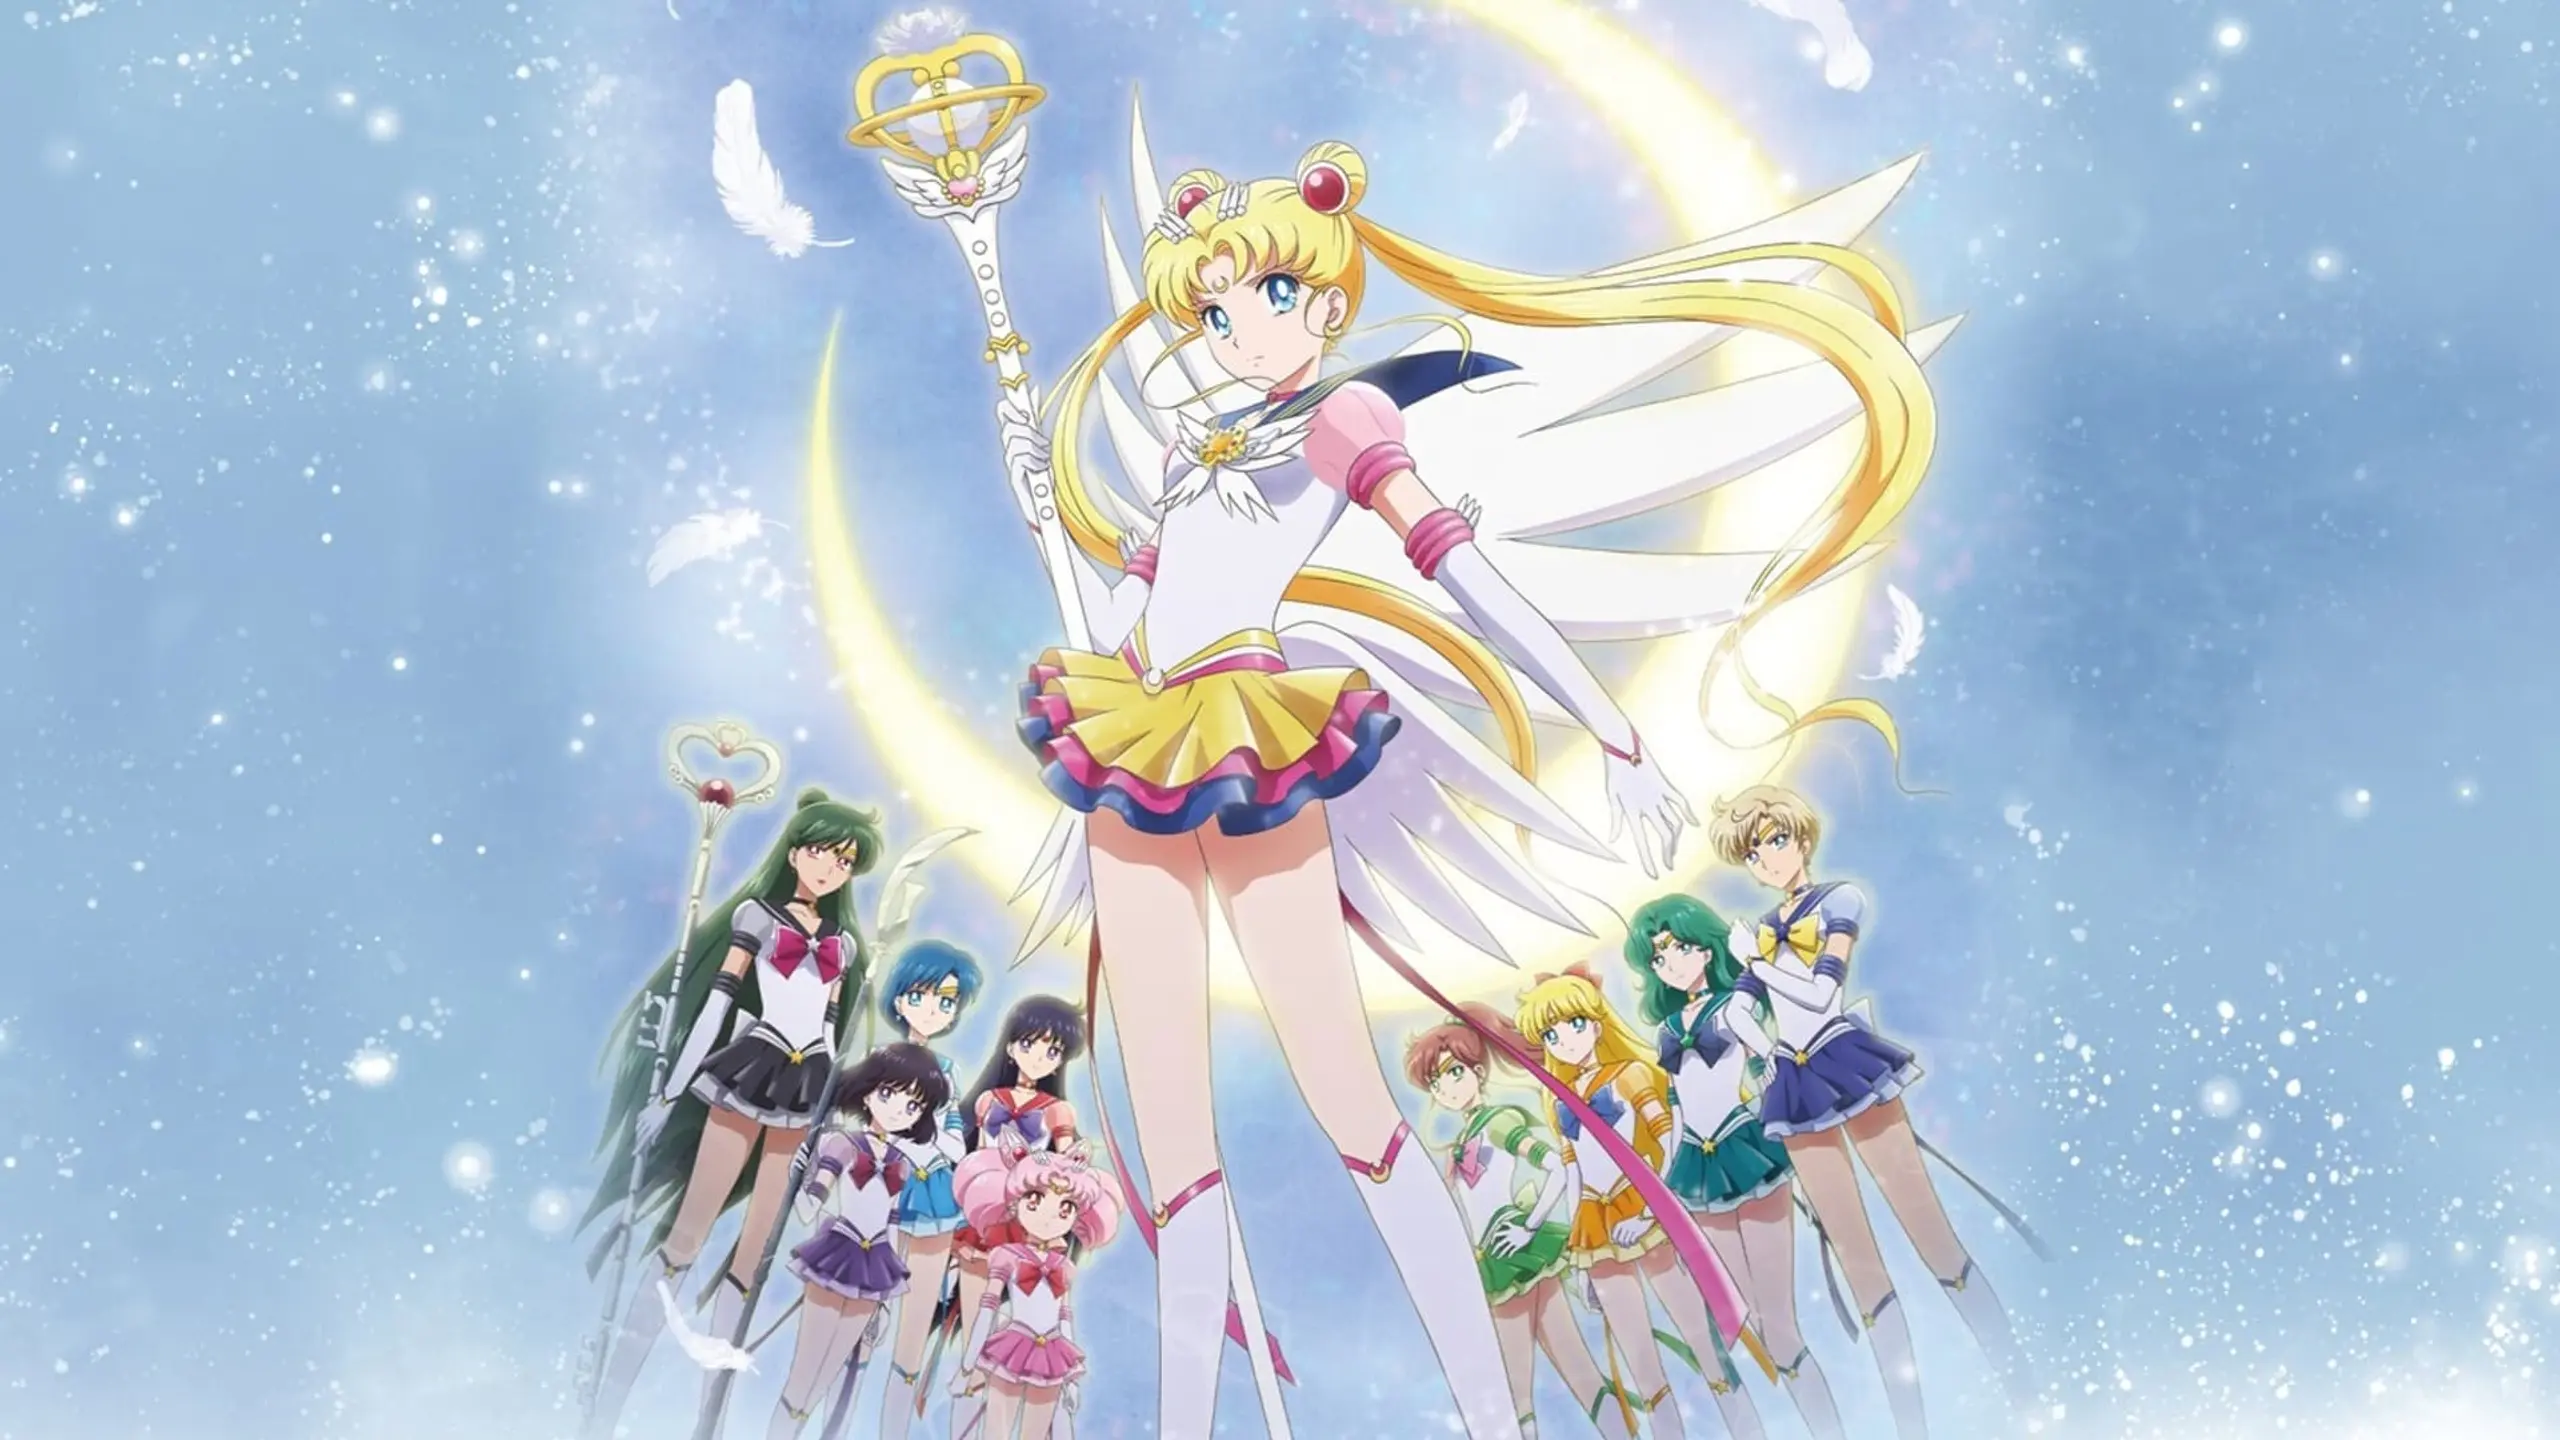 Pretty Guardian Sailor Moon Eternal: Der Film - Teil 2